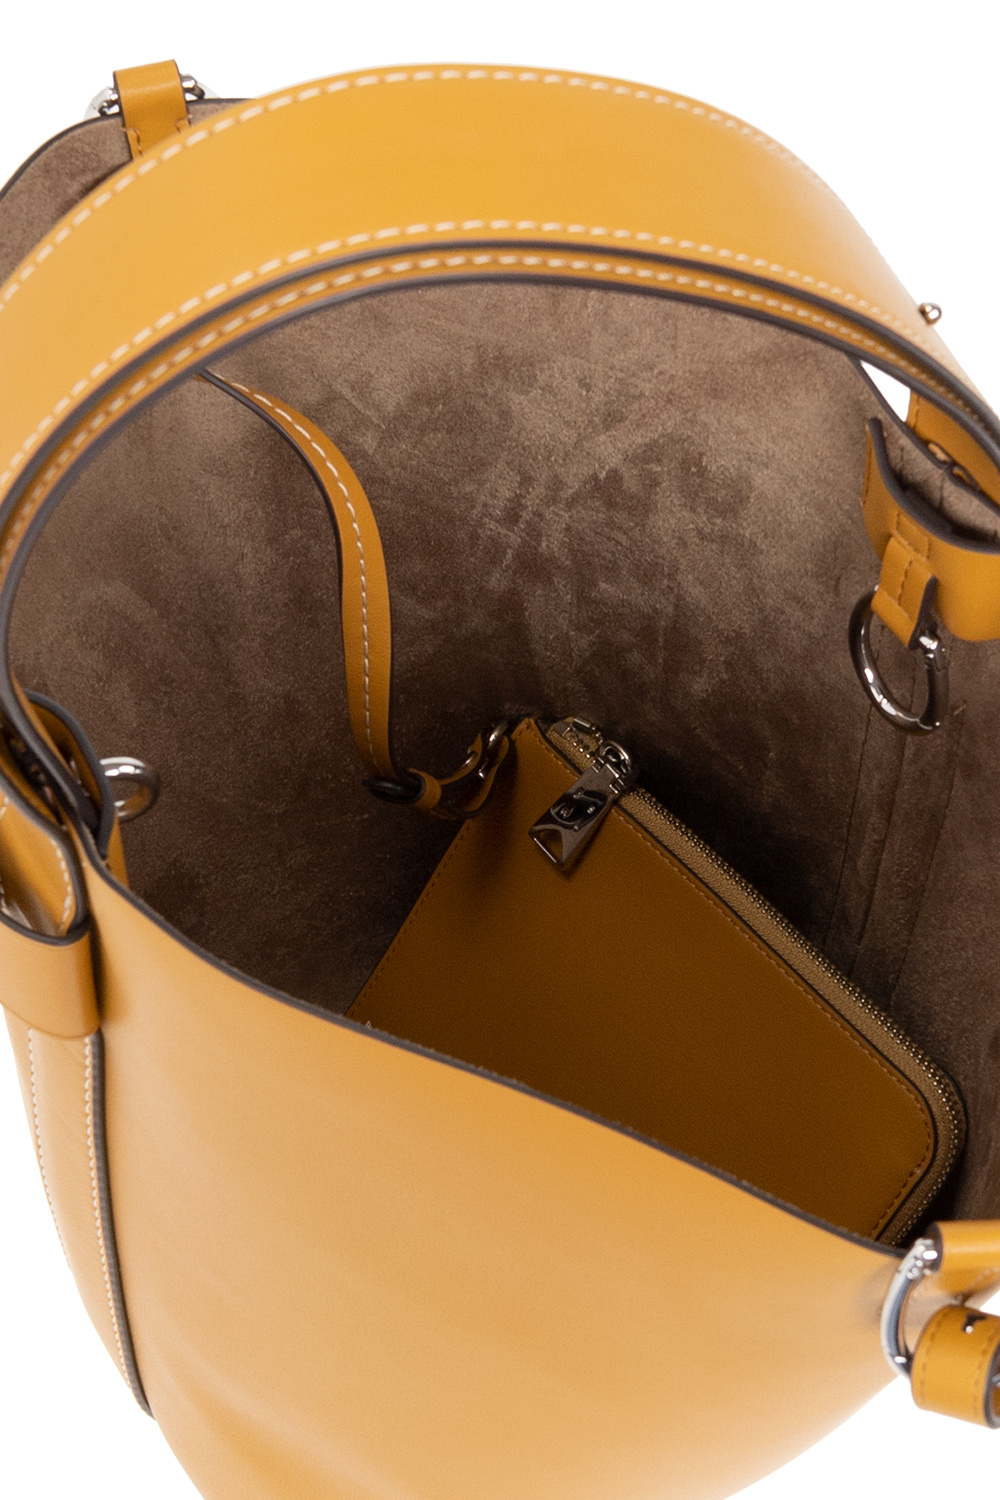 Proenza Schouler square-toe mules ‘Sullivan’ shoulder bag